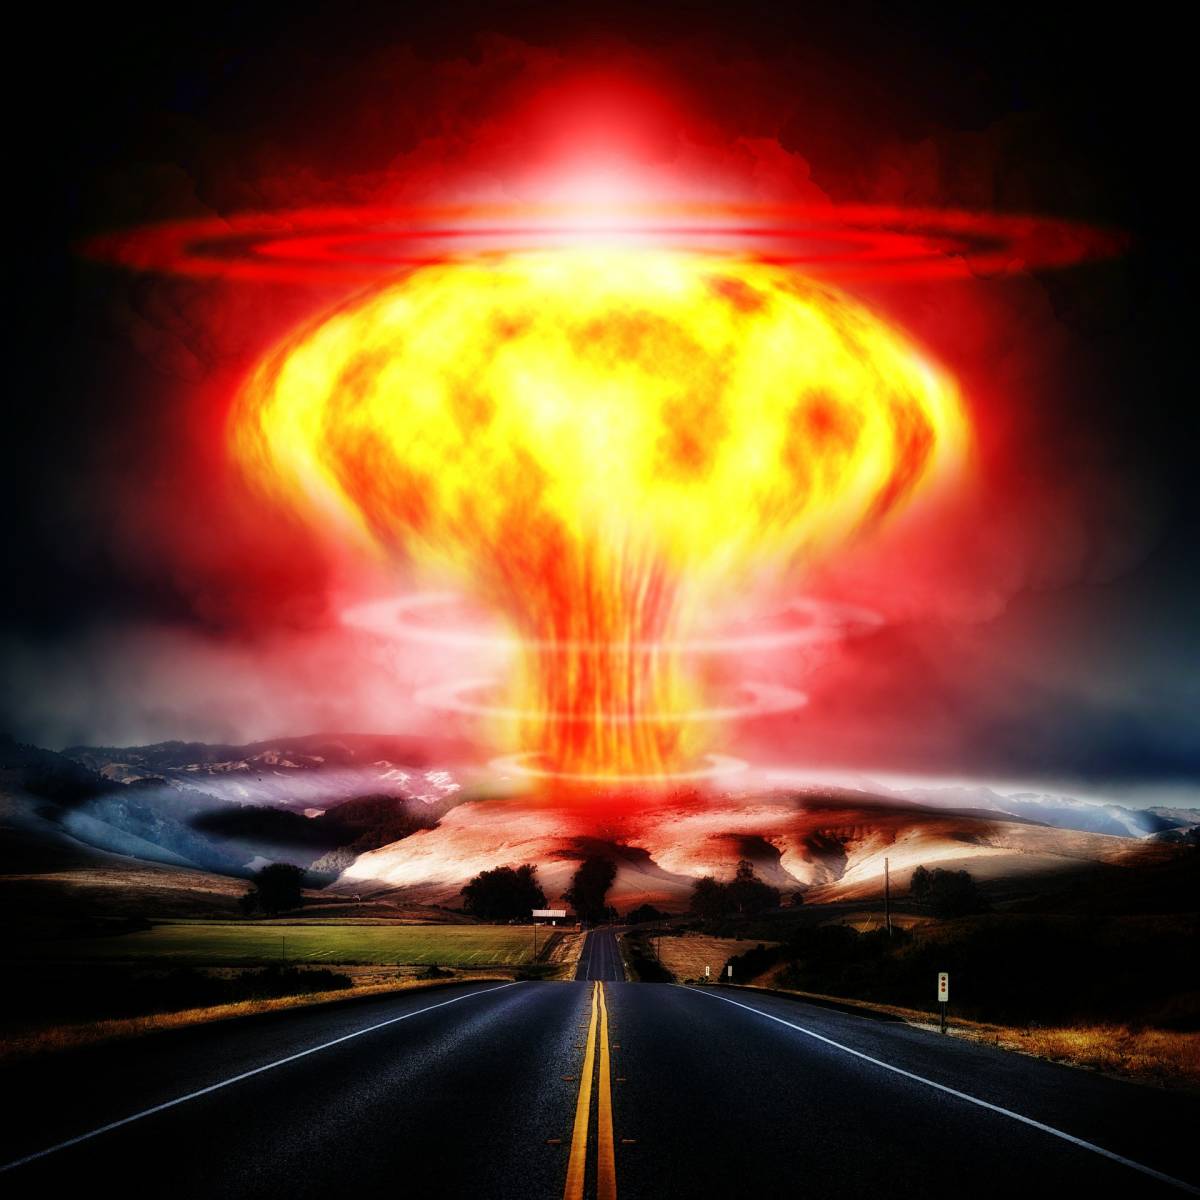 nuclear-explosion-356108_1920 (2)